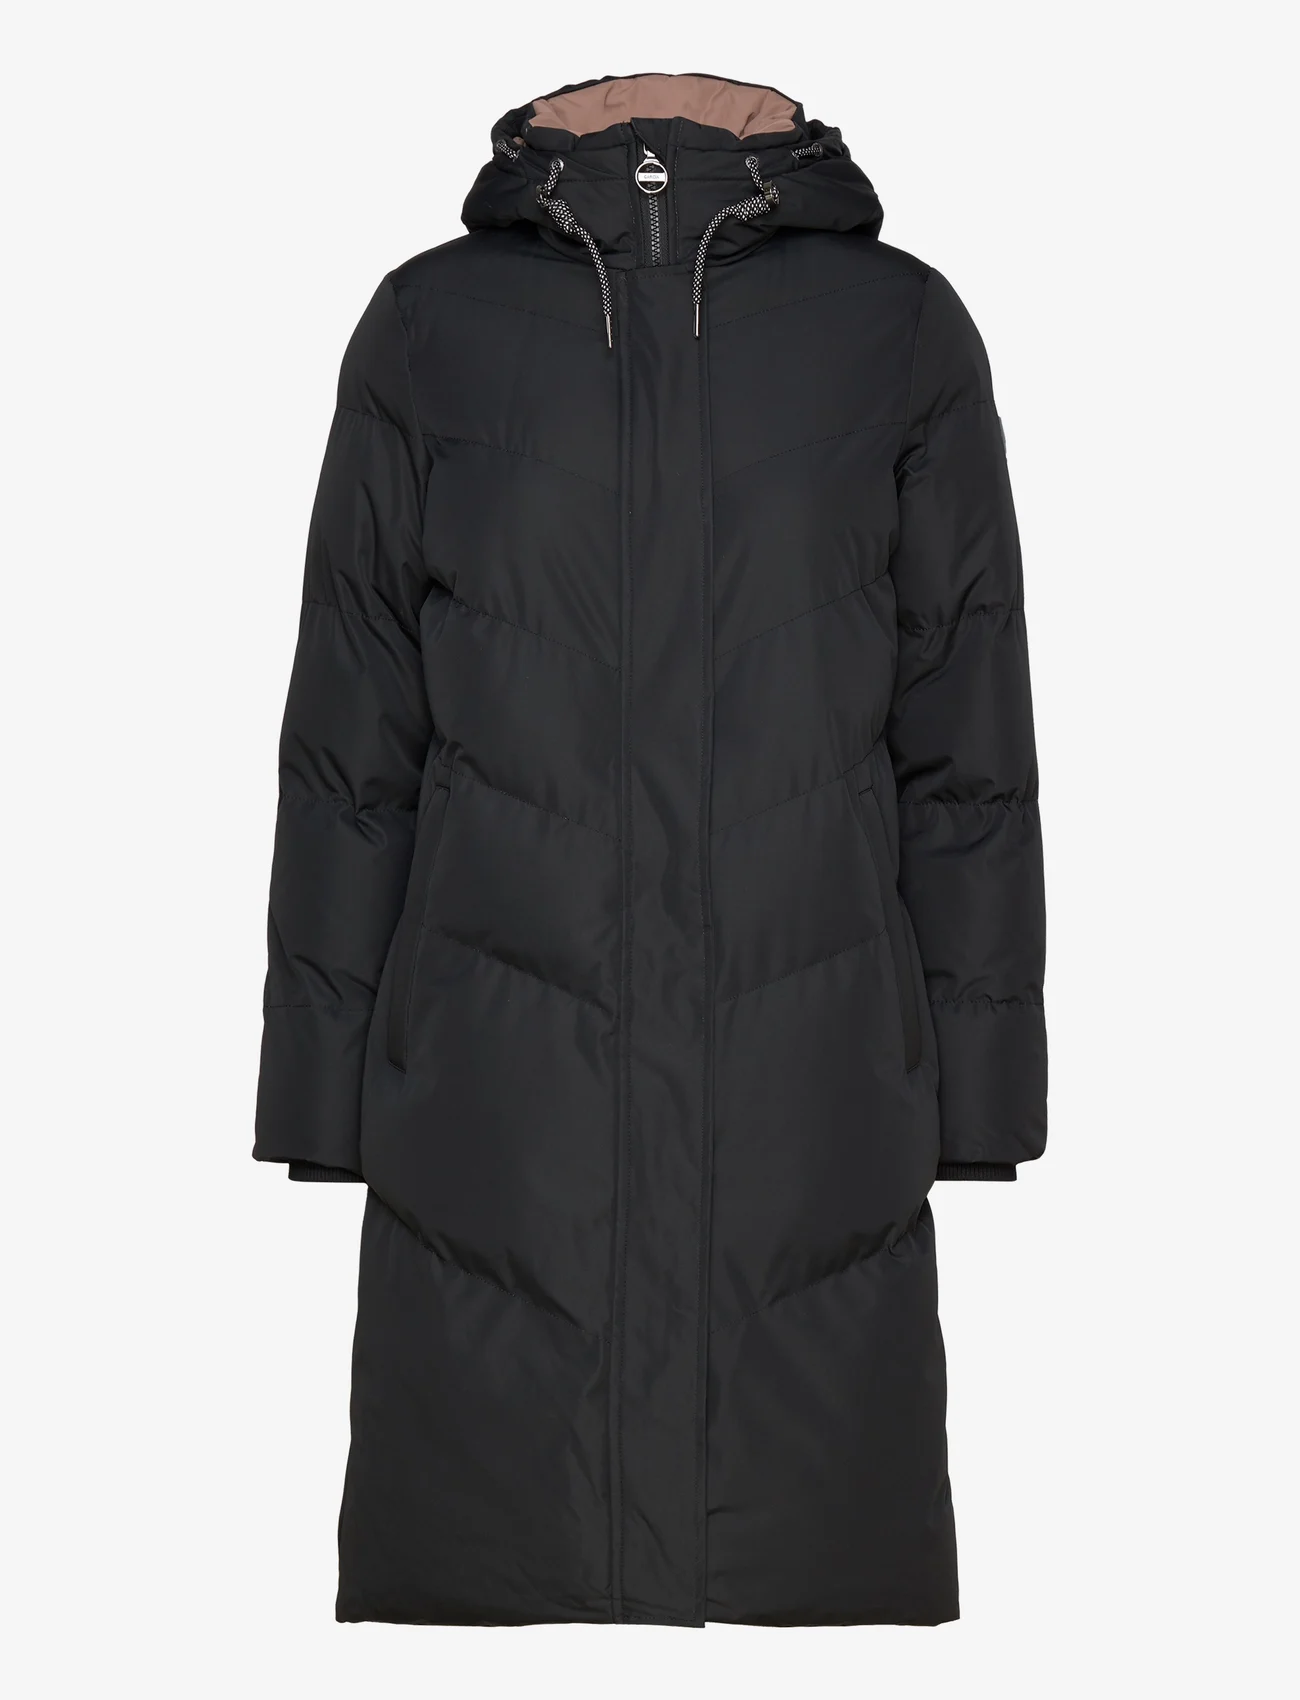 Garcia - ladies outdoor jackets - vinterjakker - black - 0